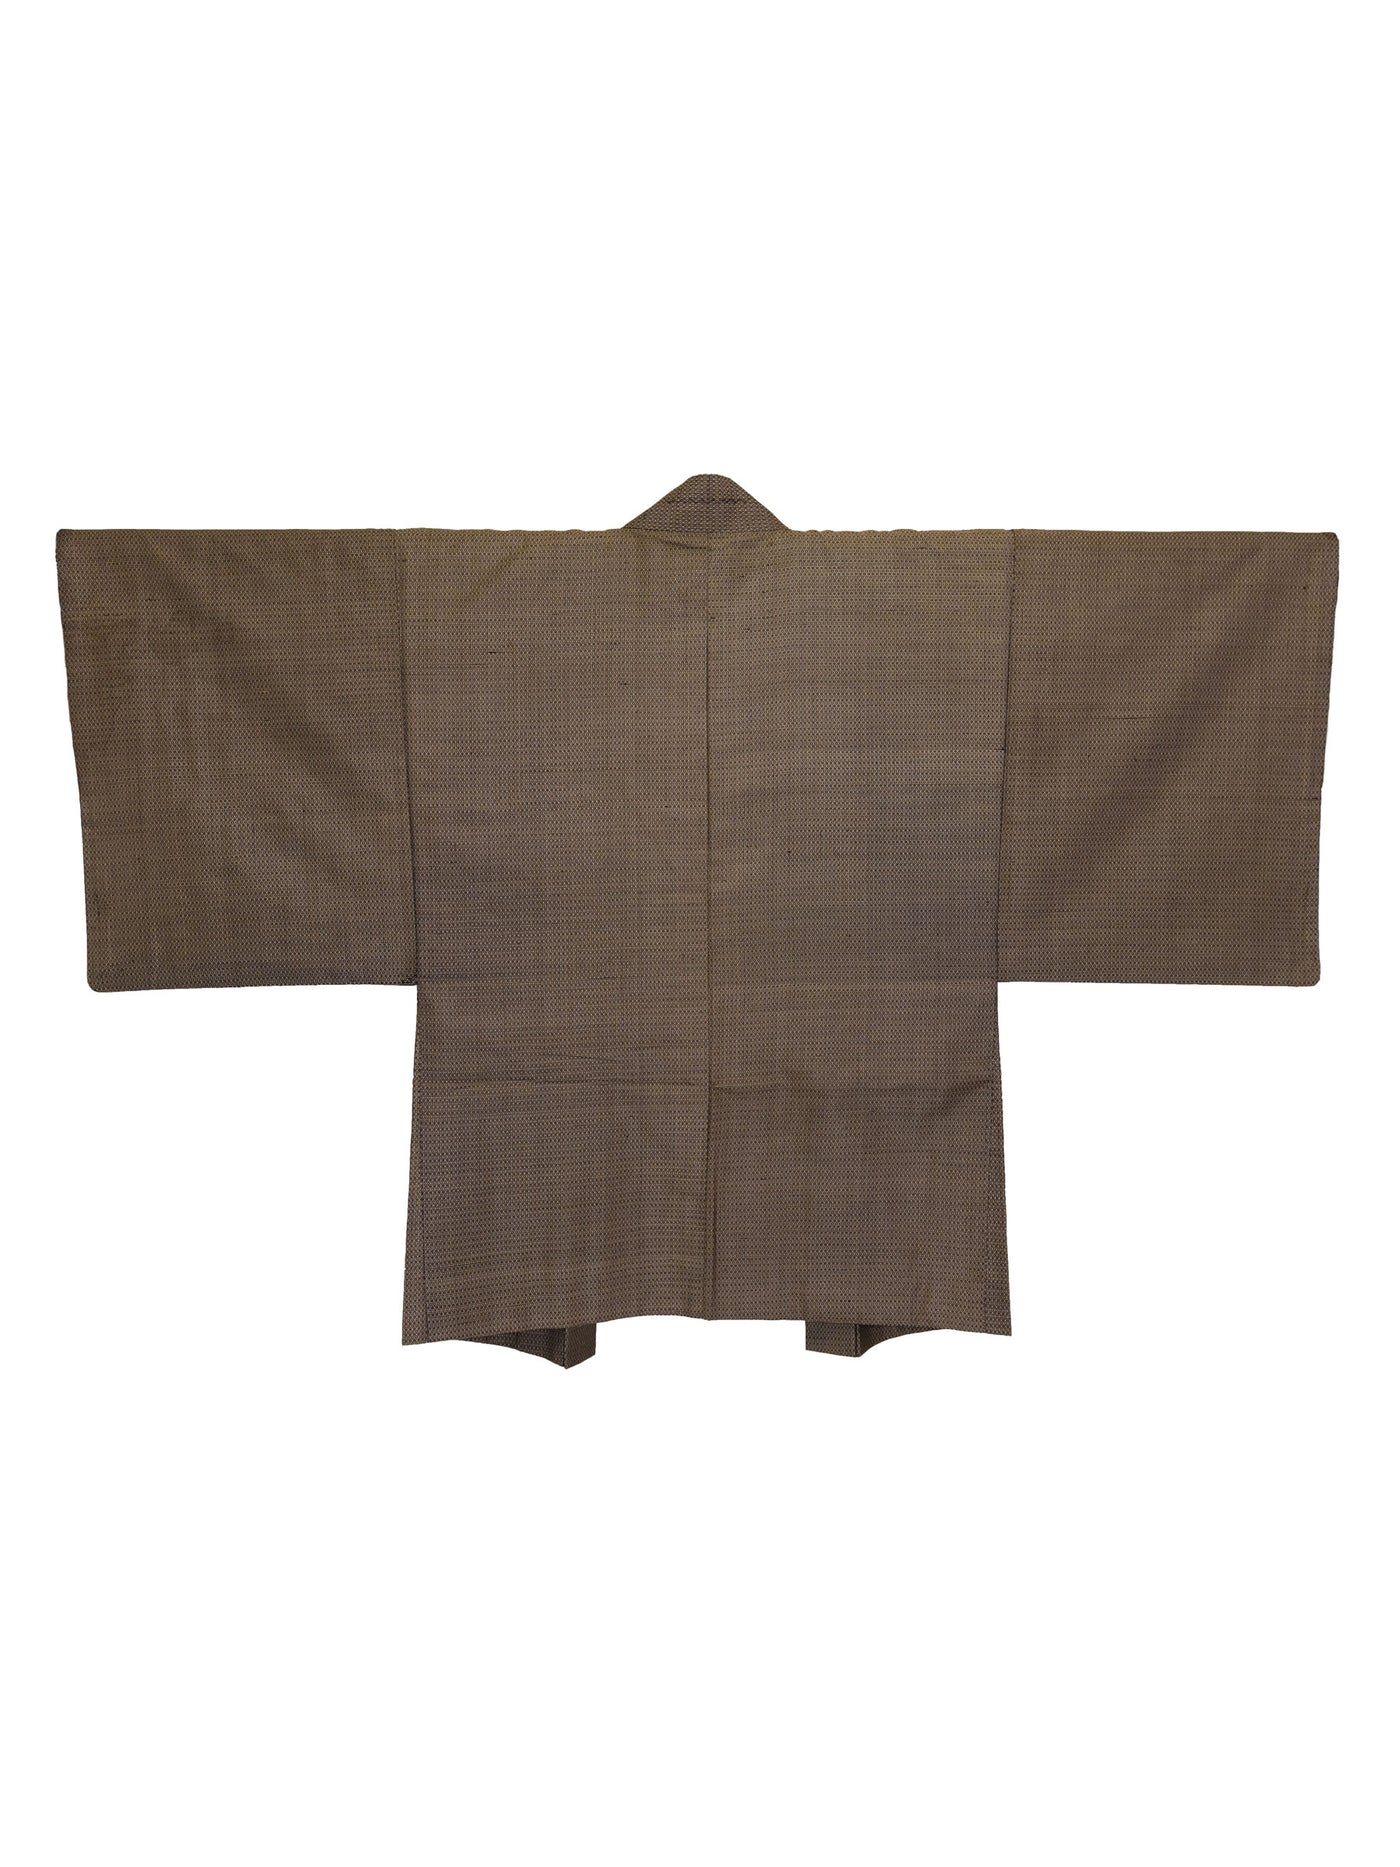 Vintage Samurai Men's Haori Jacket